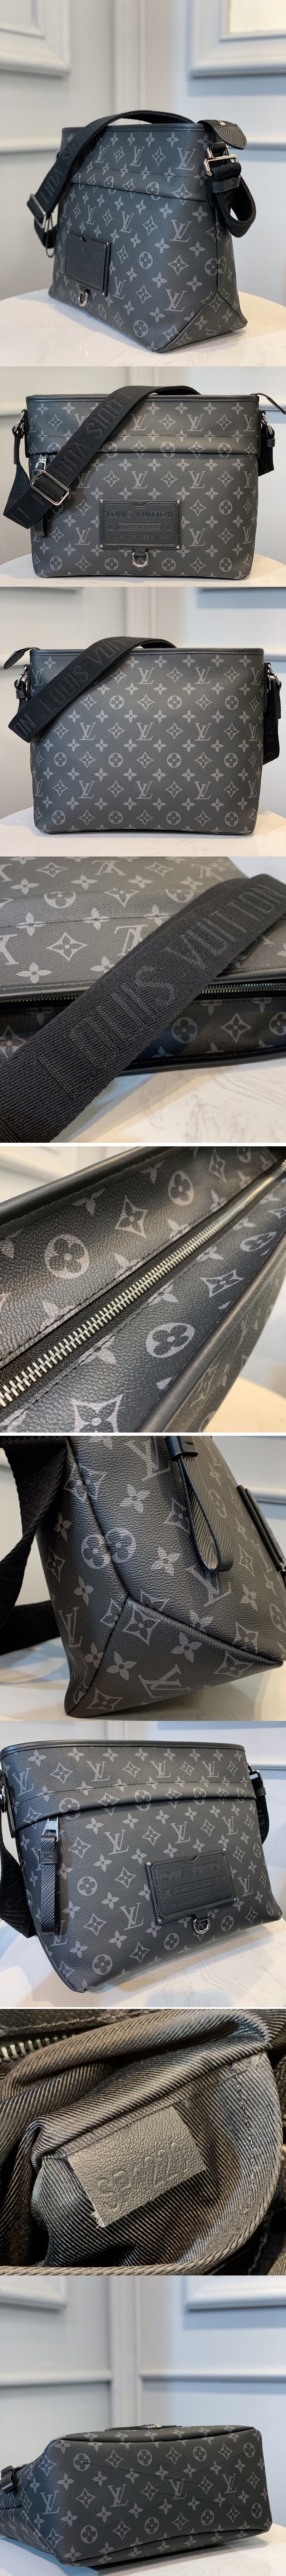 Replica Louis Vuitton N41369 Speedy 35 Tote Bag Damier Azur Canvas For Sale